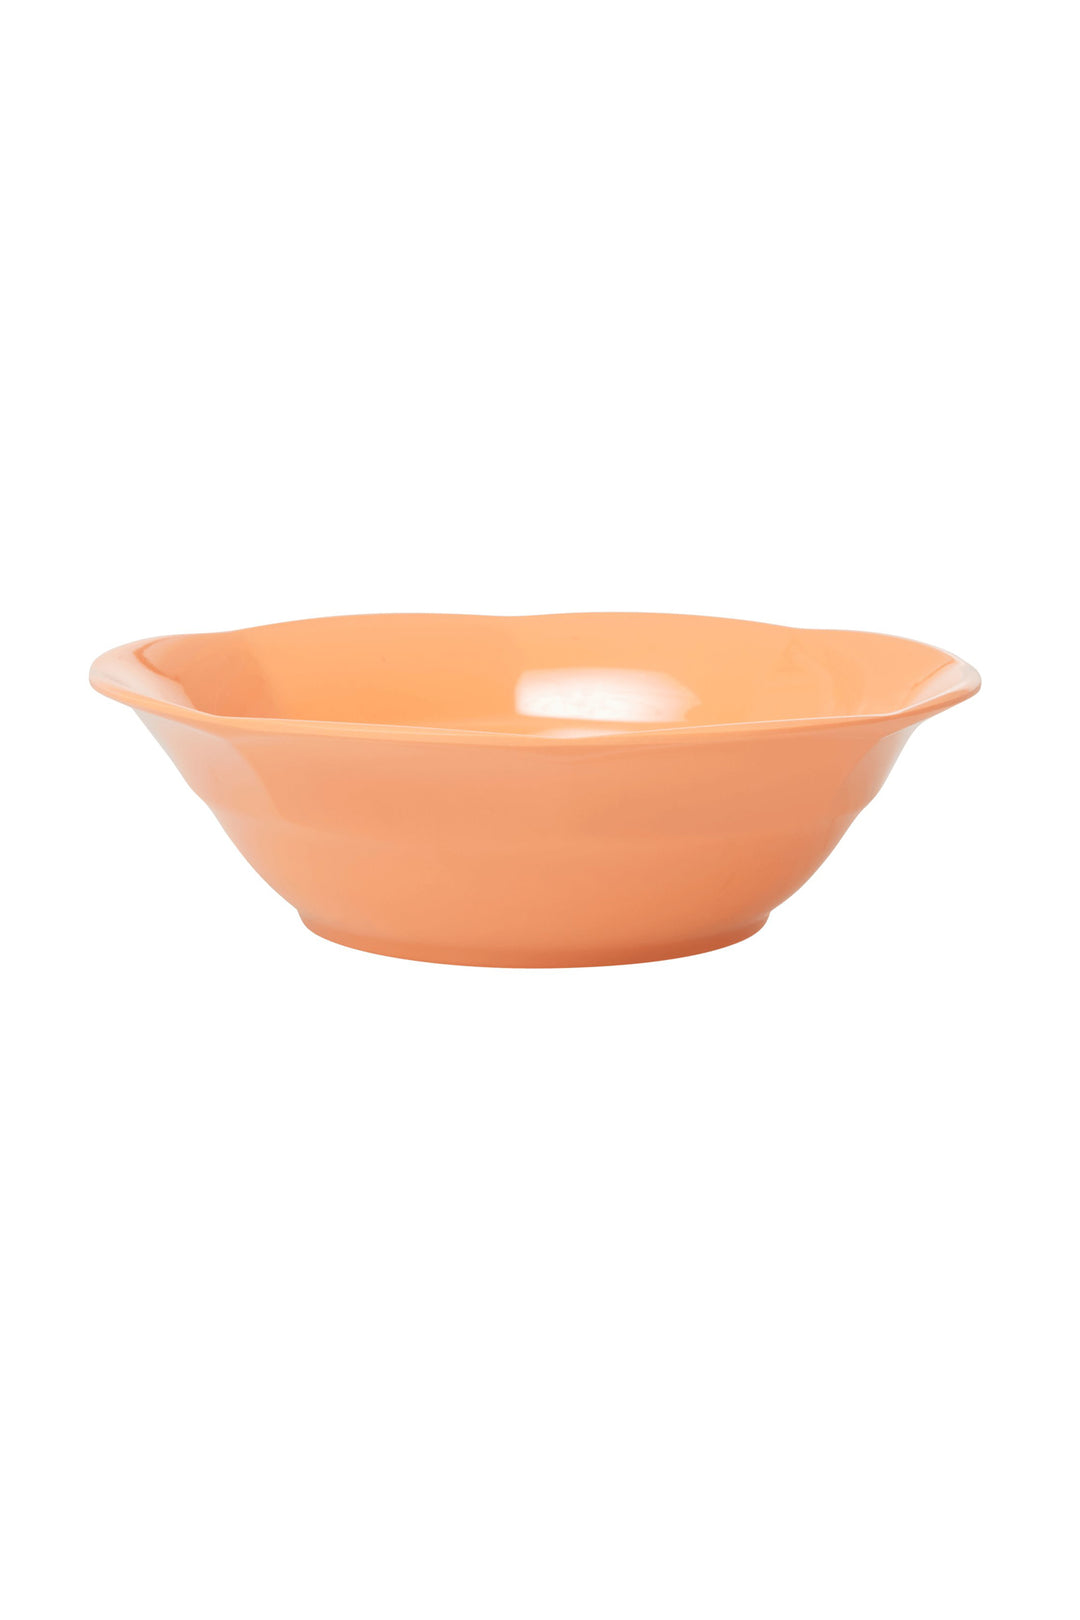 Soft Apricot Medium Melamine Soup Bowl